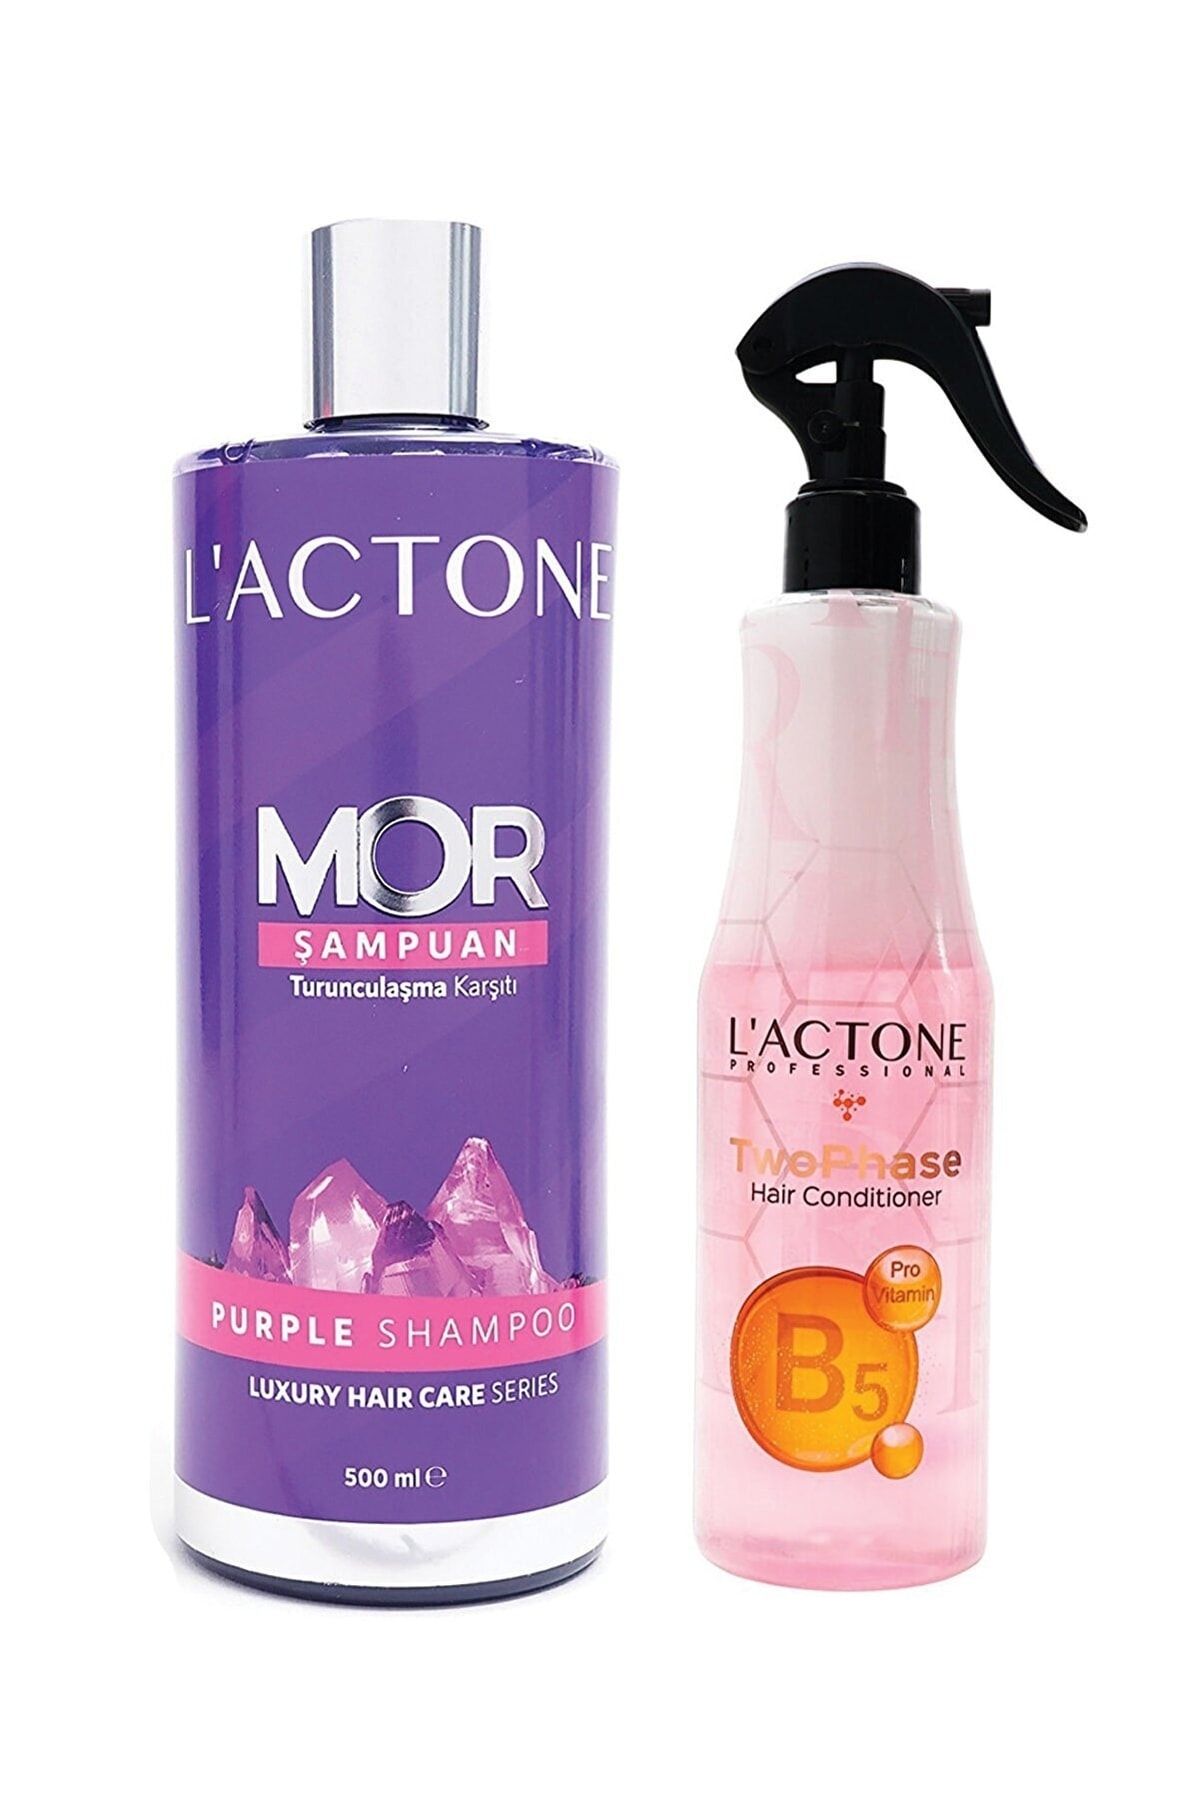 L'ACTONE Mor Şampuan + B5 Pro Vitamin Fön Suyu Saç Bakım Seti 1